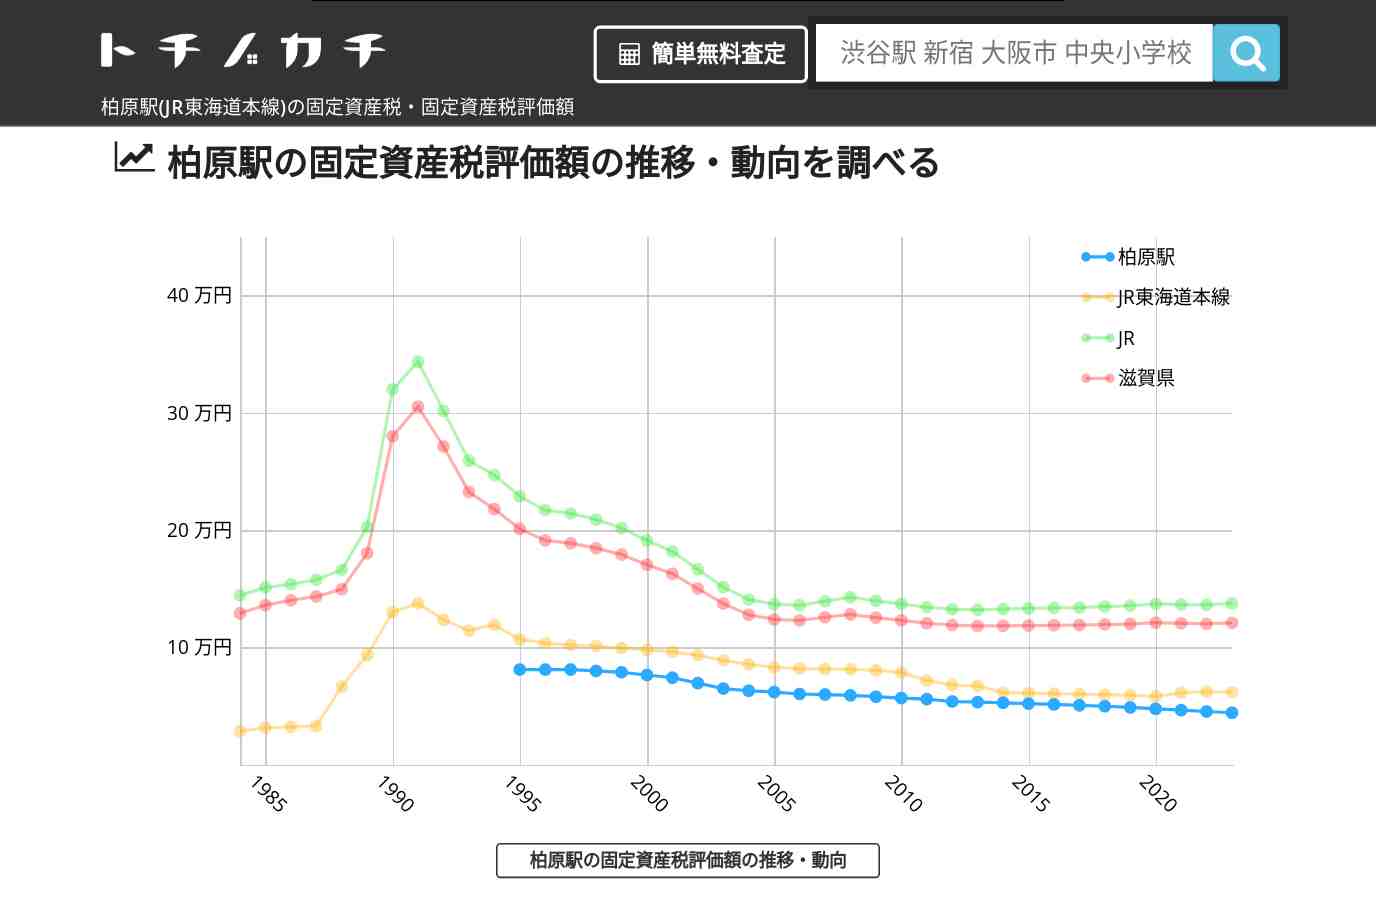 柏原駅(JR東海道本線)の固定資産税・固定資産税評価額 | トチノカチ